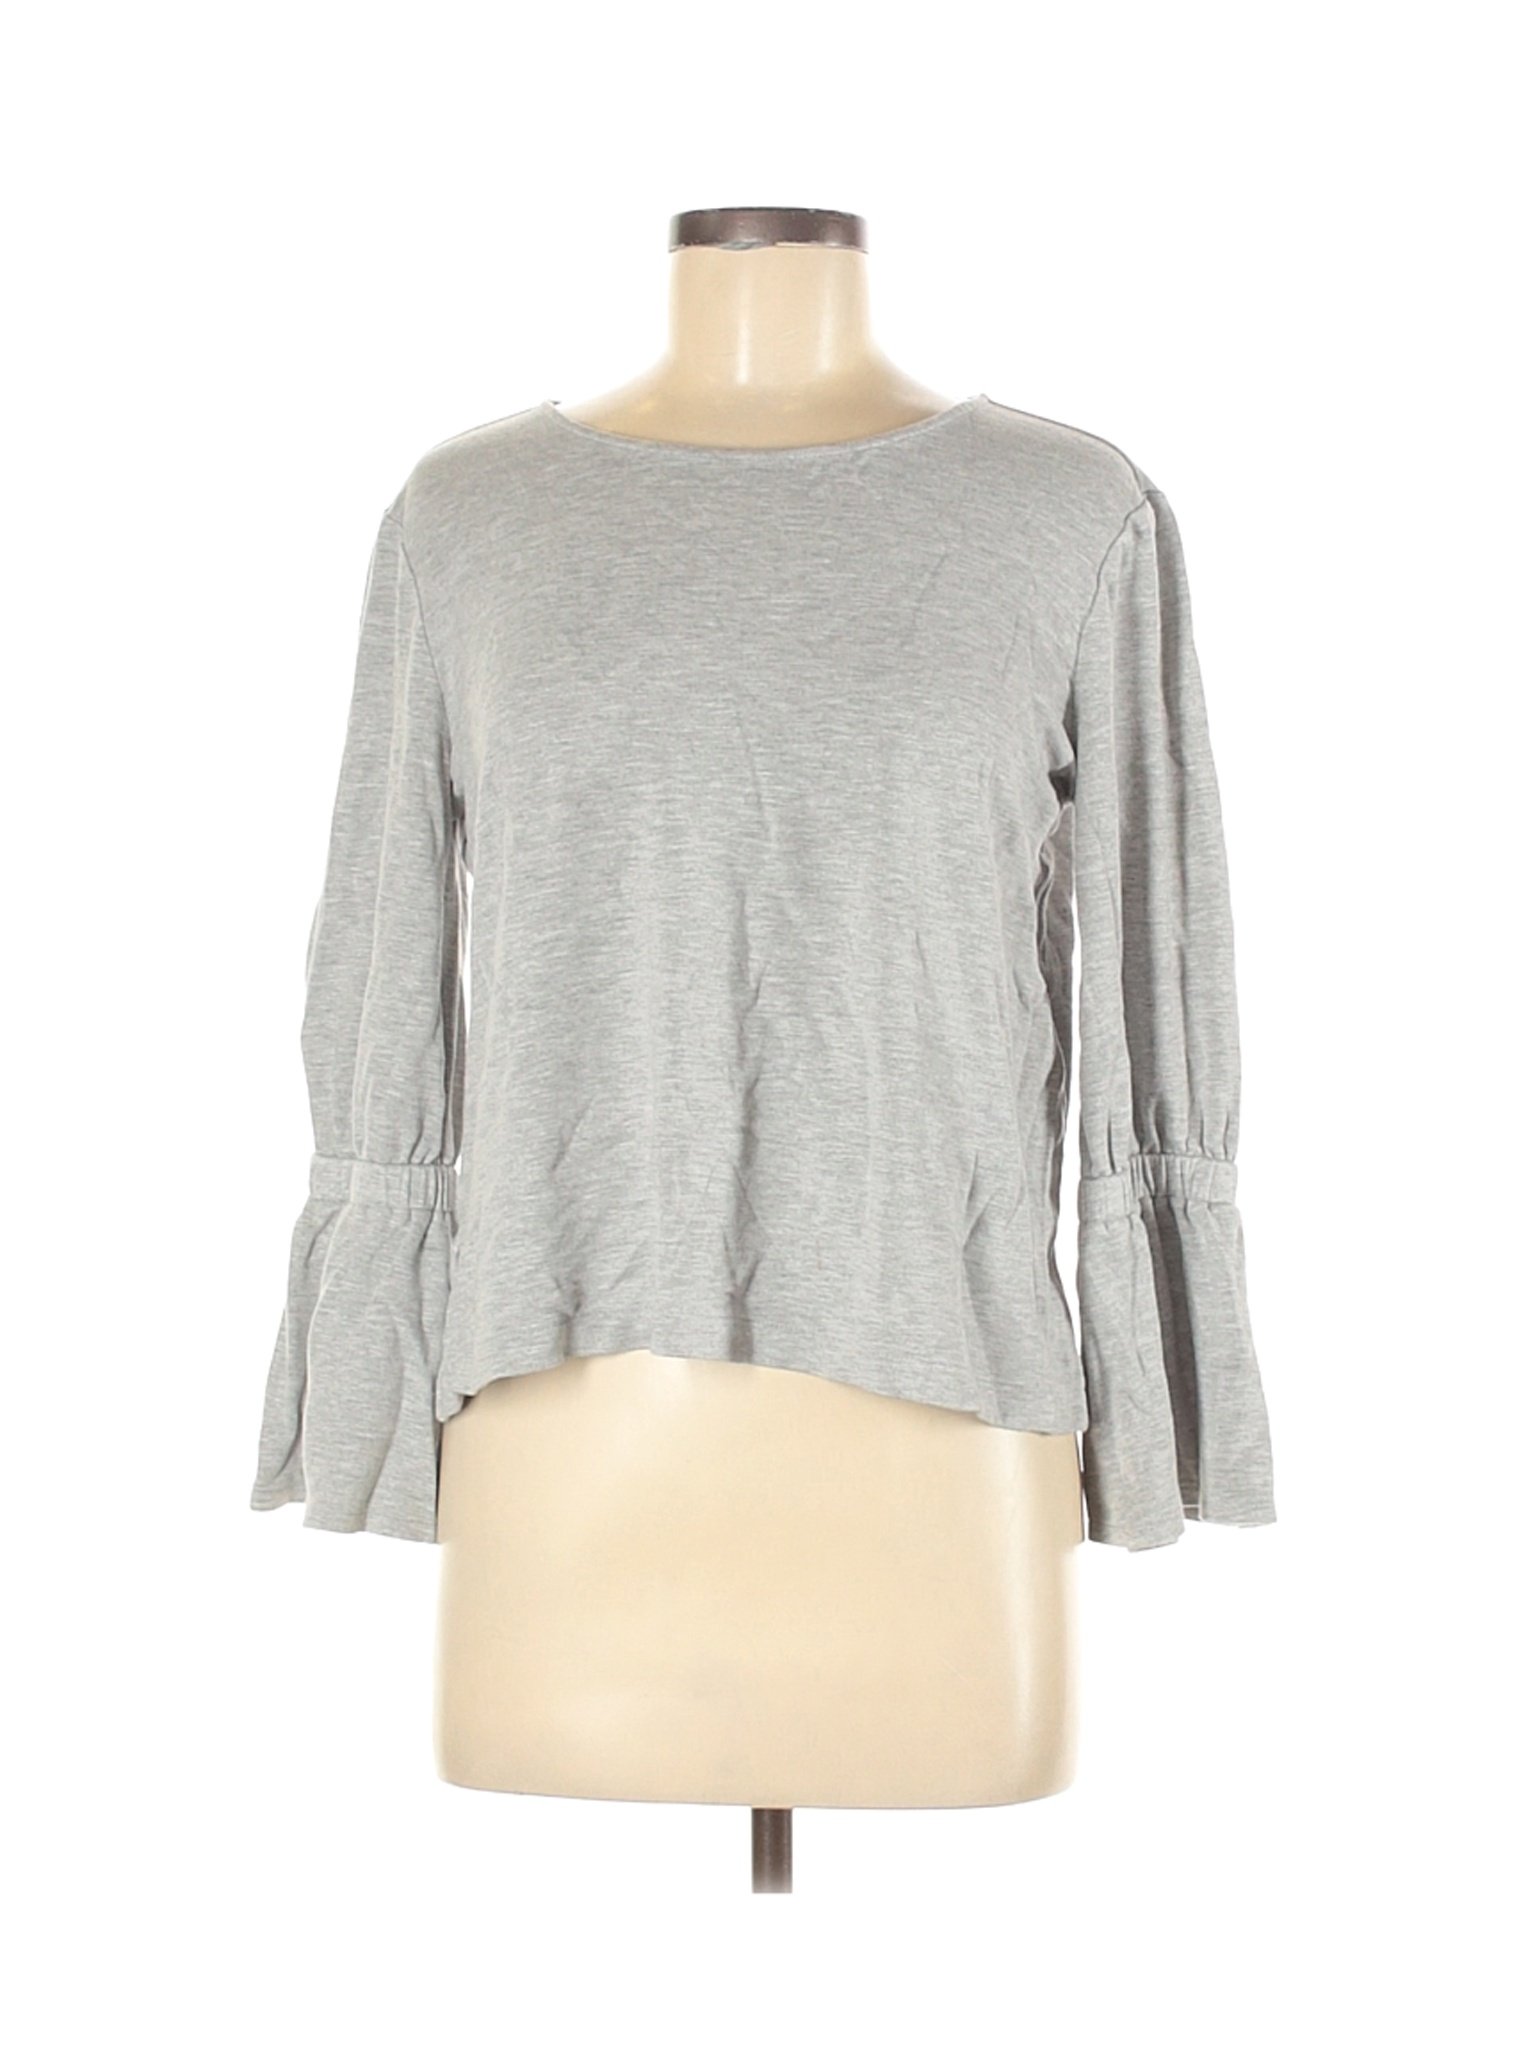 Ann Taylor Women Gray Pullover Sweater M | eBay